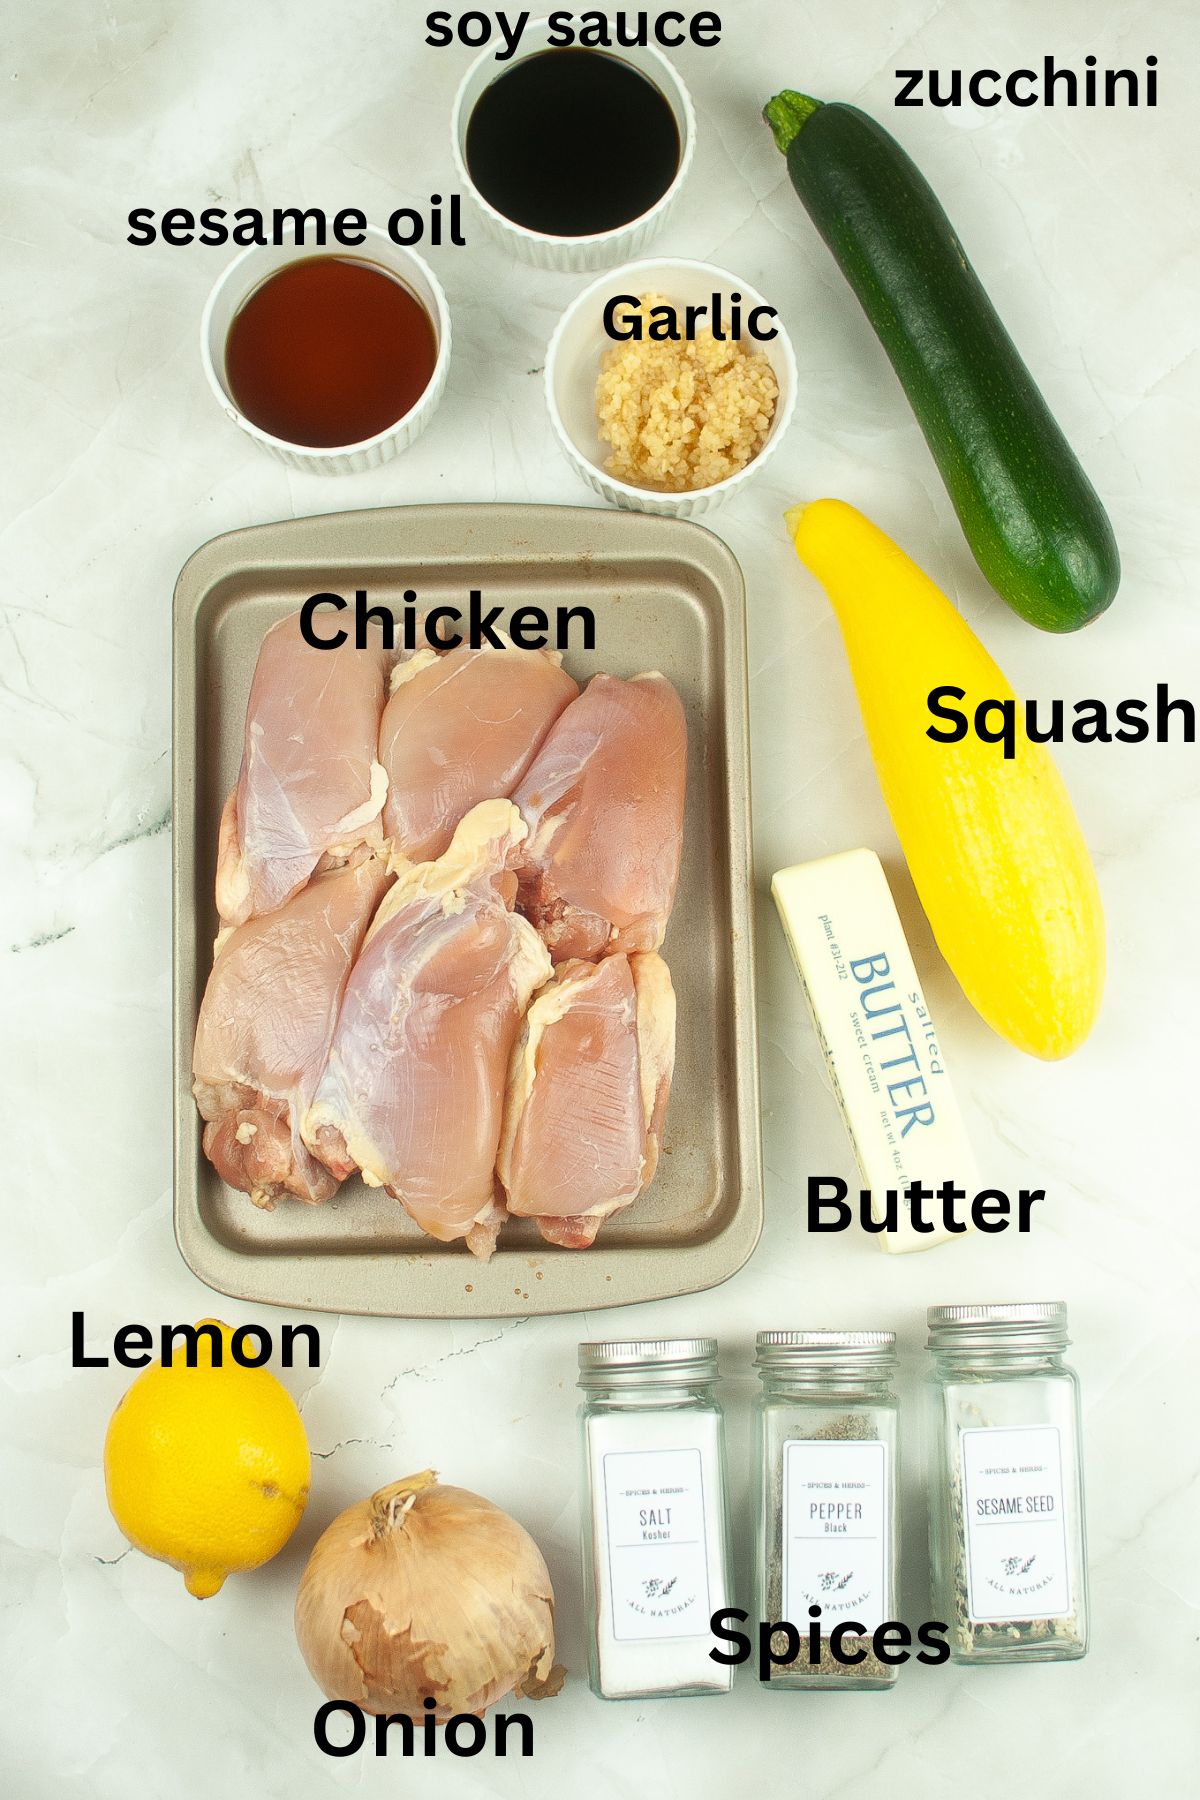 soy sauce, sesame oil, zucchini, garlic, squash, chicken, butter, lemon, onion, spice